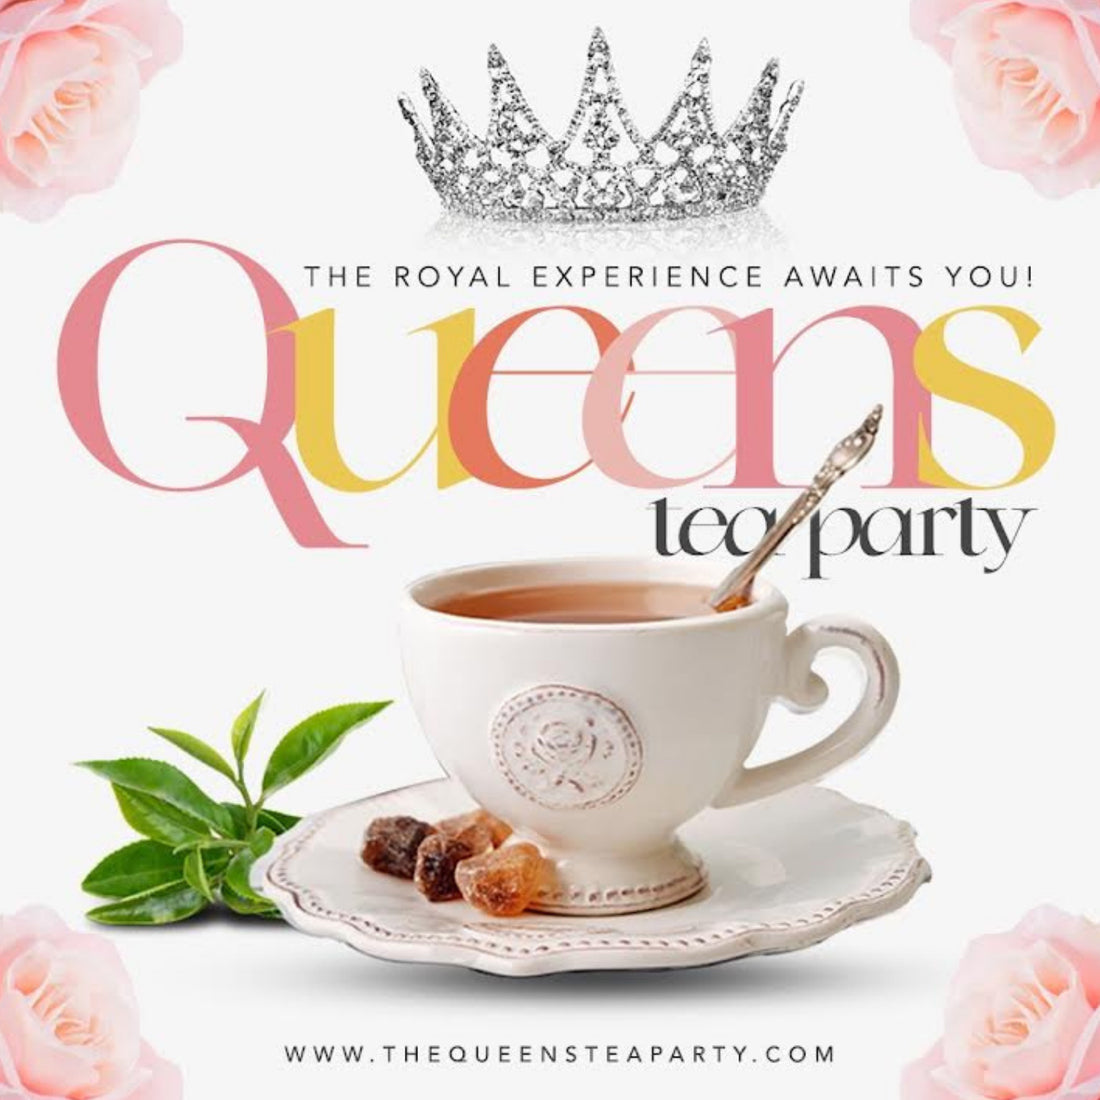 The Atlanta Queens Tea Party is Here!